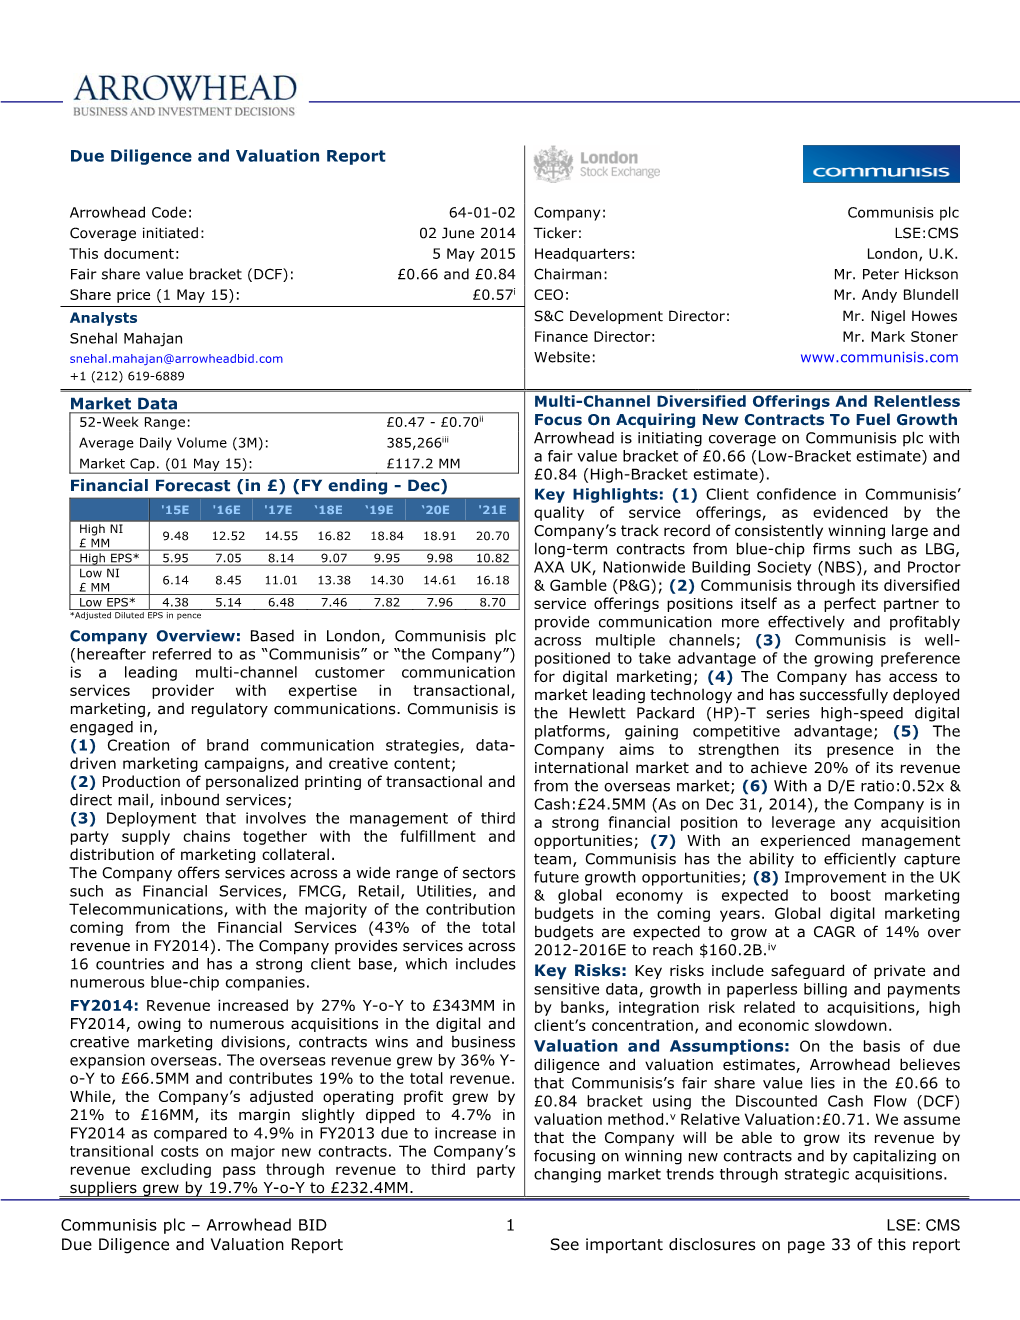 Communisis Plc Coverage Initiated: 02 June 2014 Ticker: LSE:CMS This Document: 5 May 2015 Headquarters: London, U.K